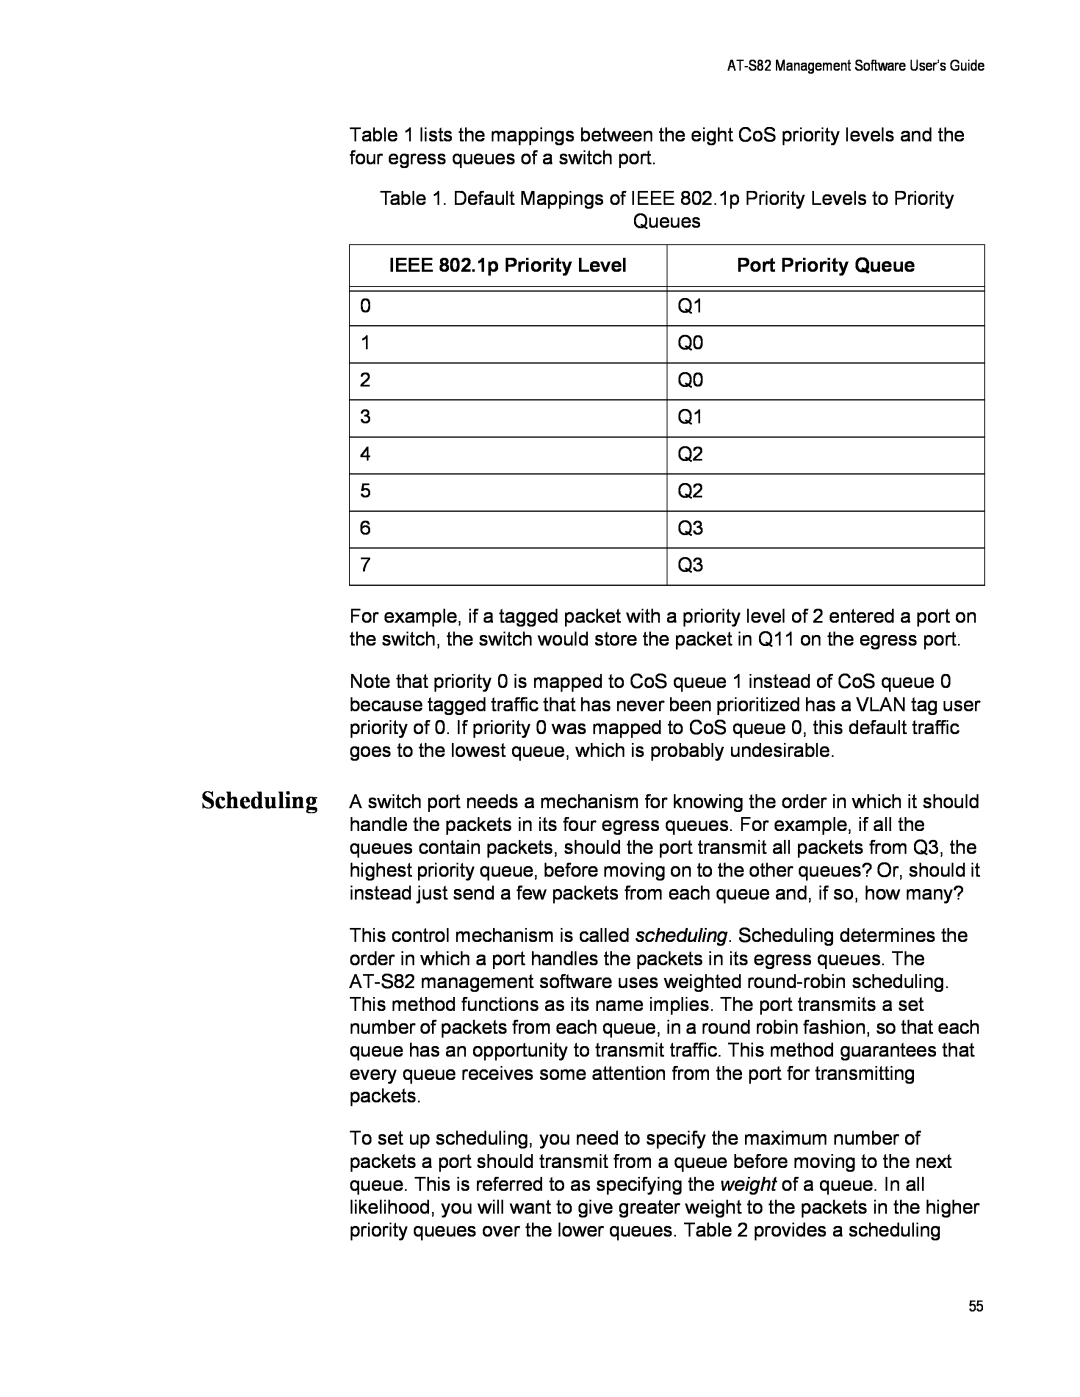 Allied Telesis AT-GS950/8 manual IEEE 802.1p Priority Level, Port Priority Queue 